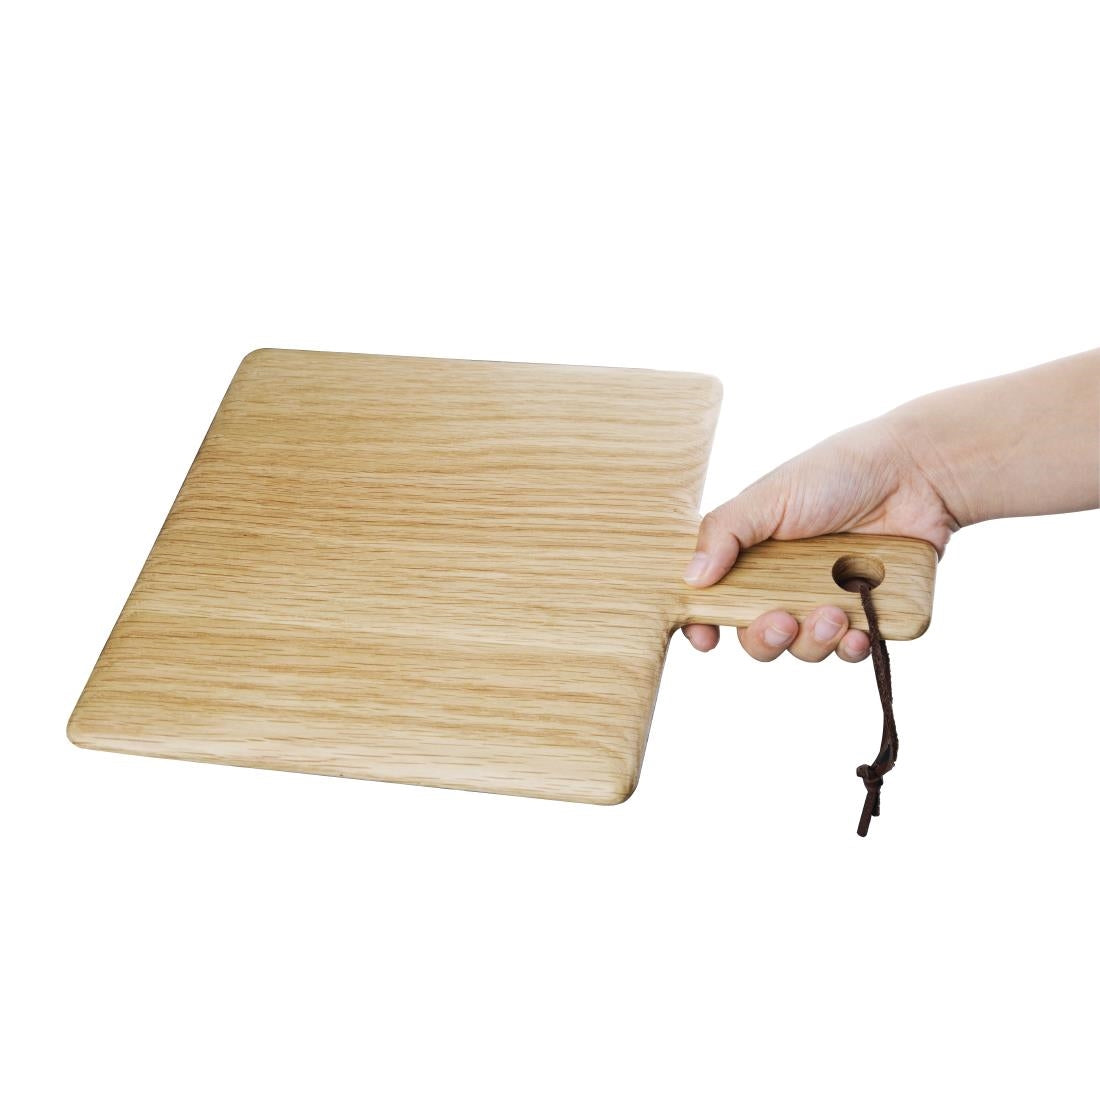 Olympia Oak Wood Handled Wooden Board Small 230mm